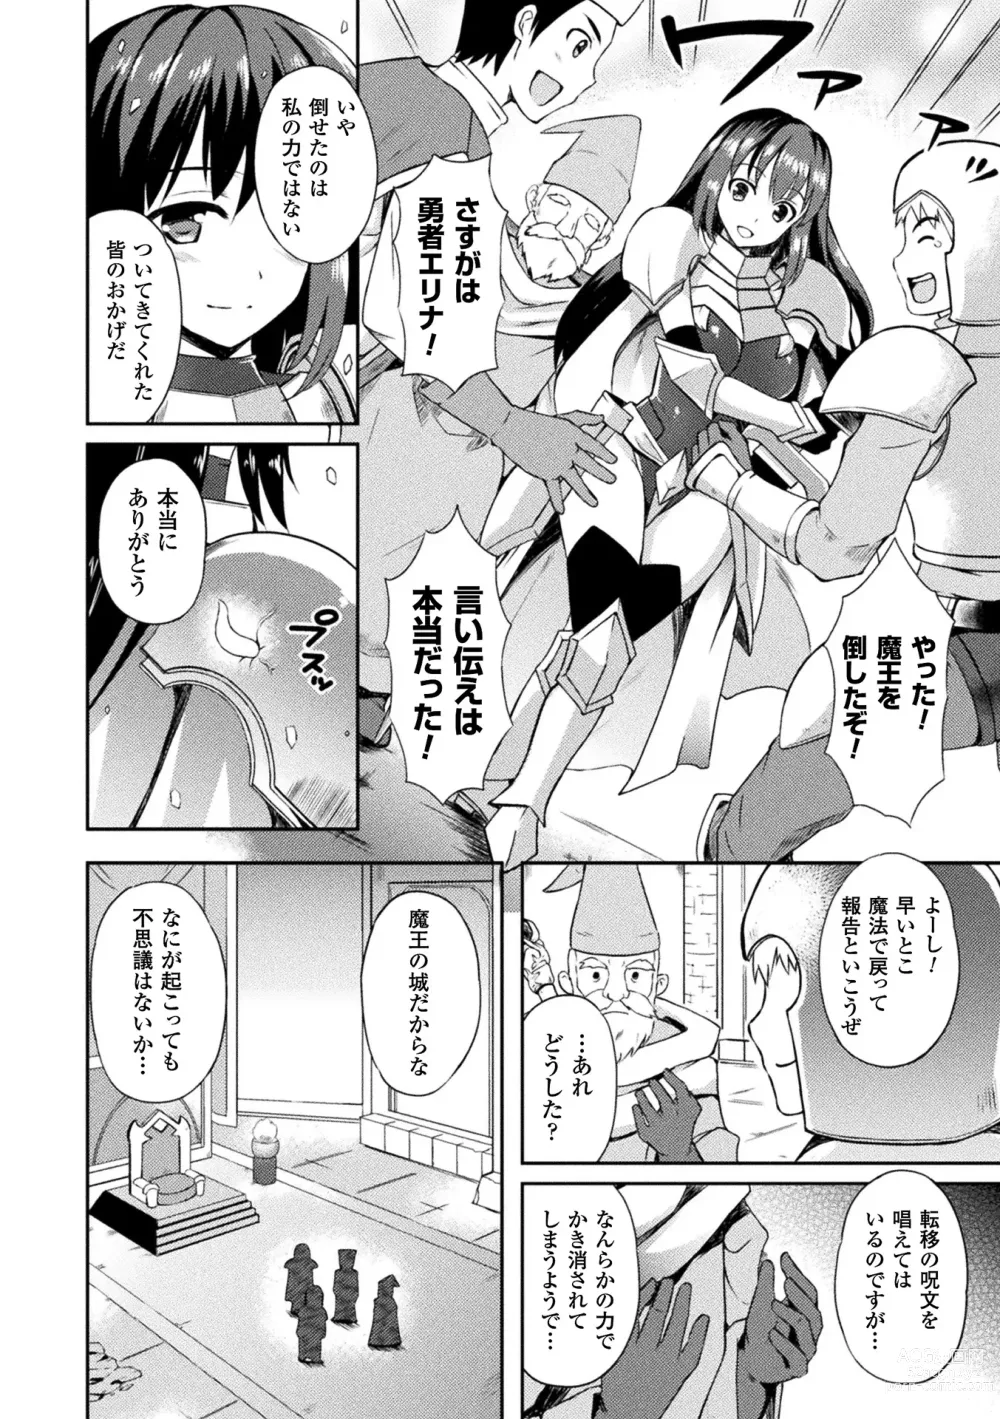 Page 6 of manga Tentacle Holic